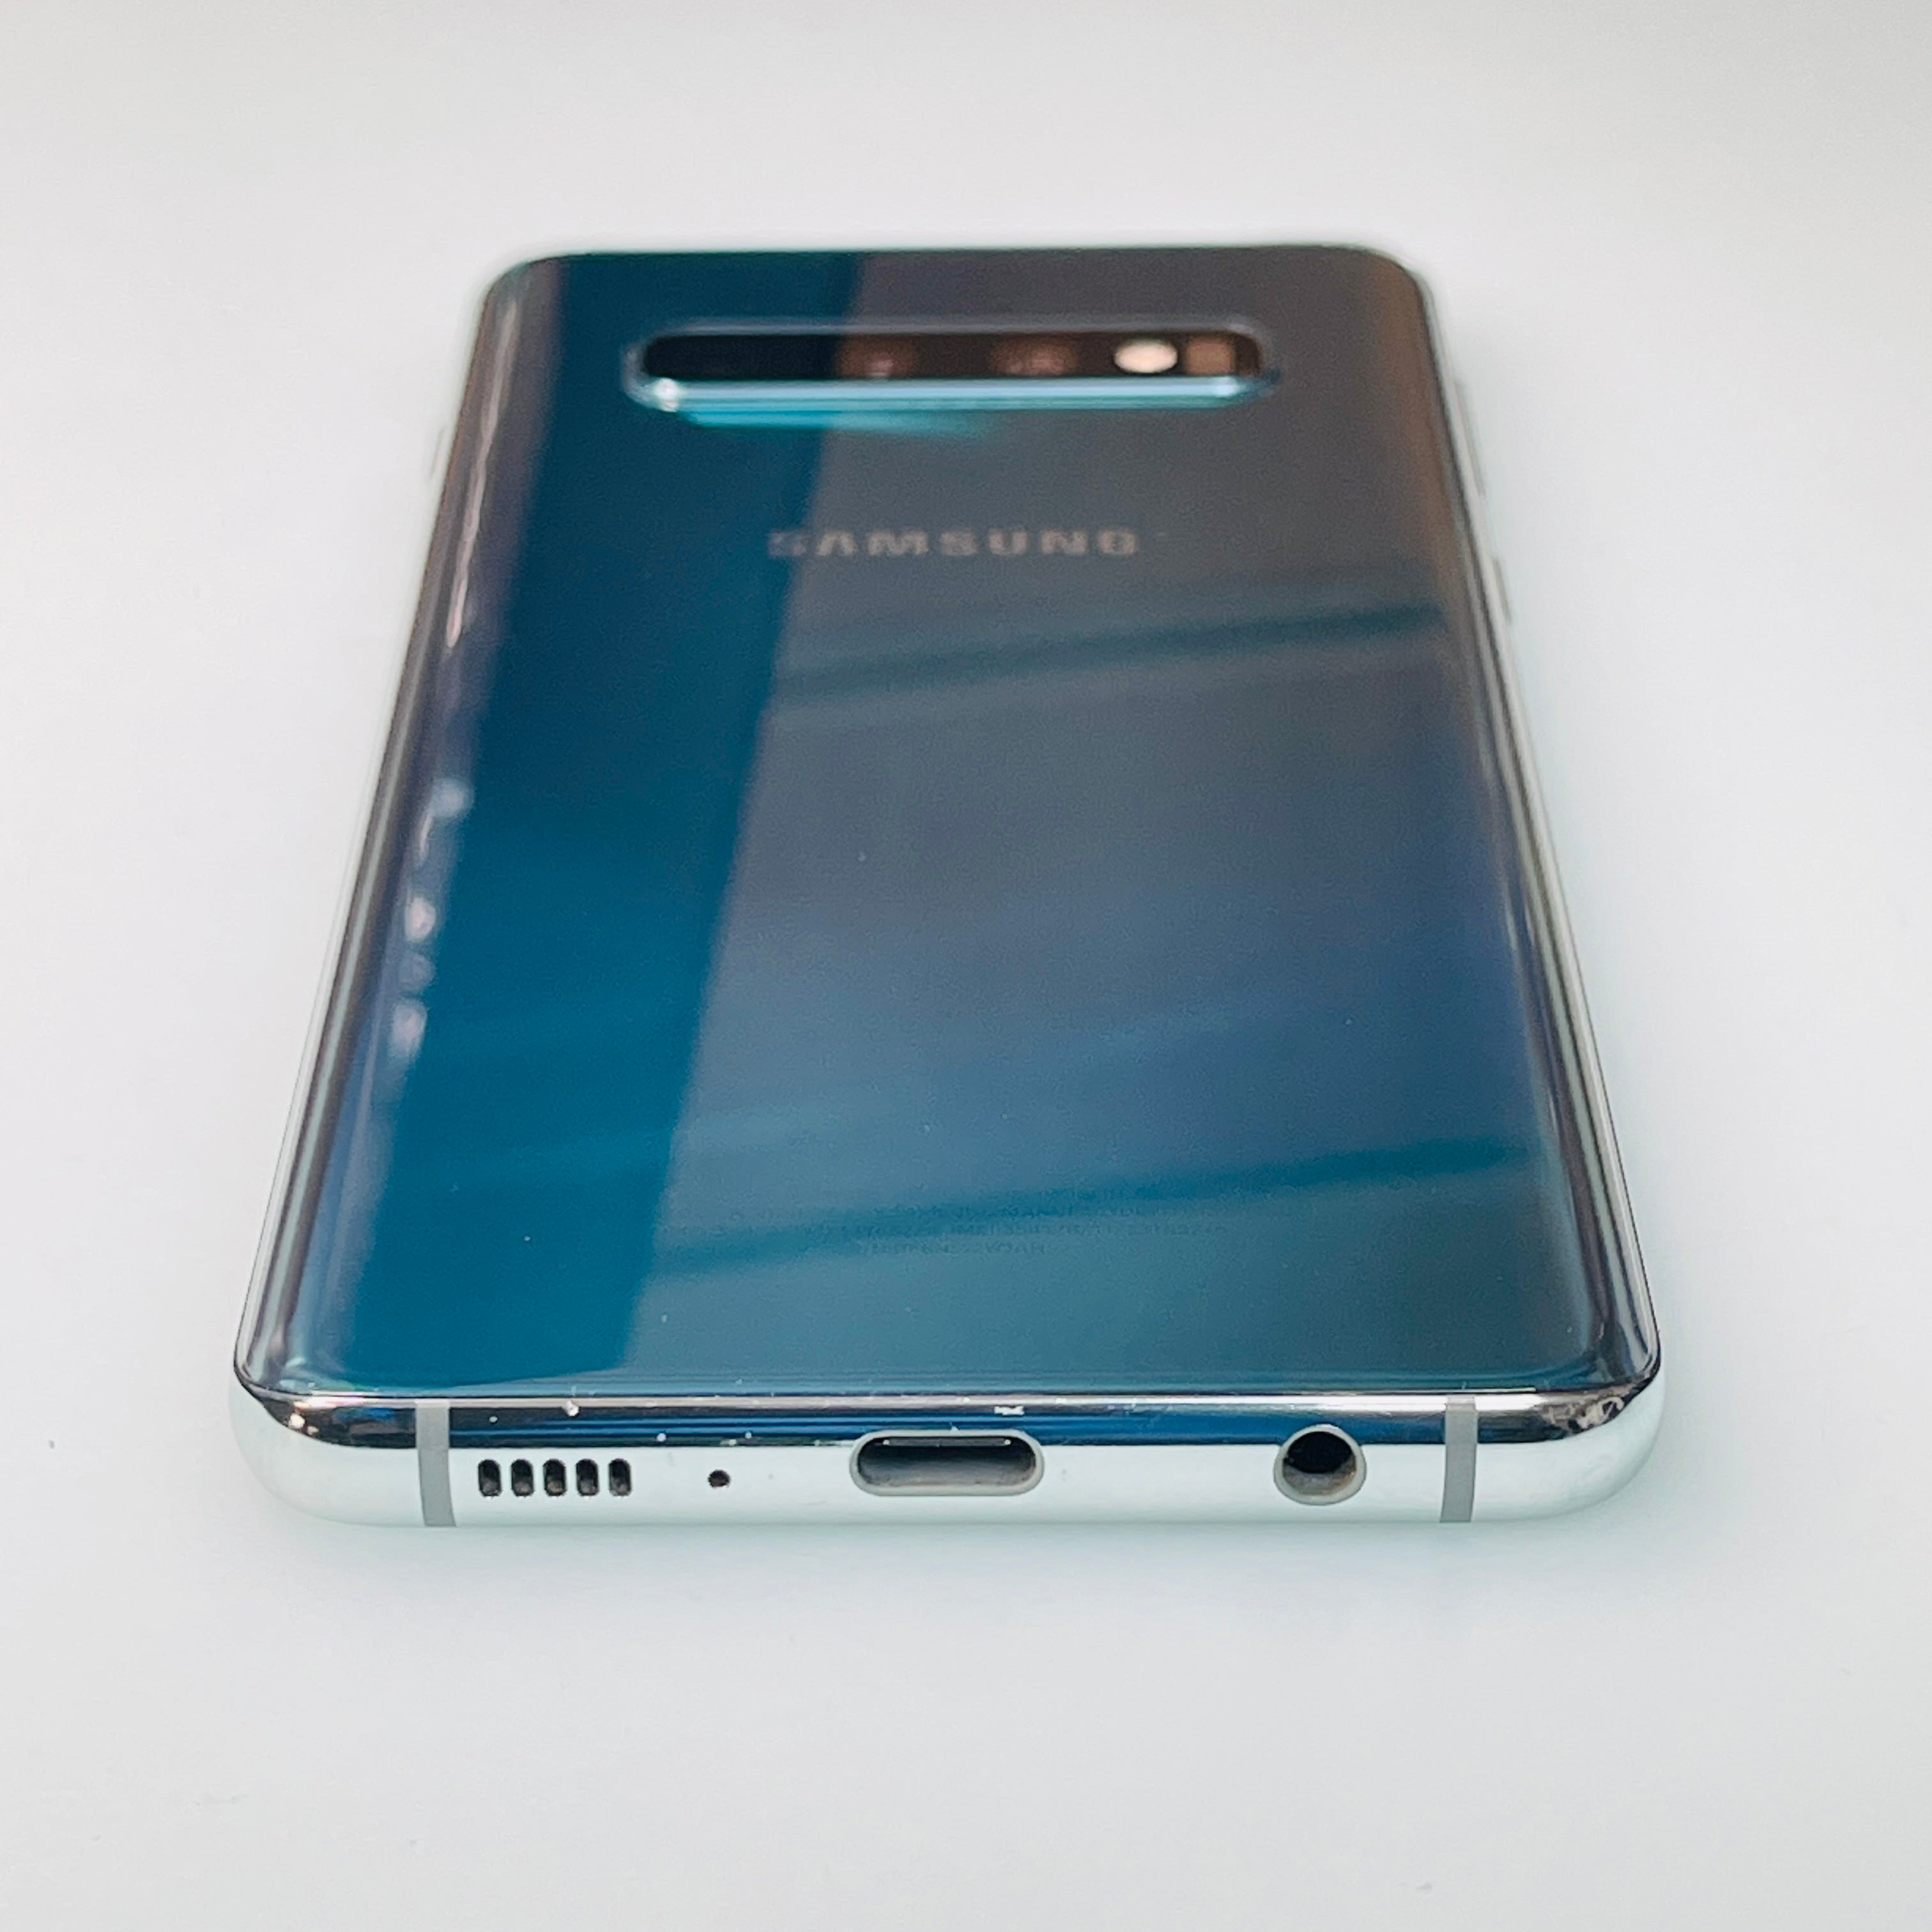 Samsung Galaxy S10 128GB Android Smartphone Unlocked Very Good Condition REF#65898B